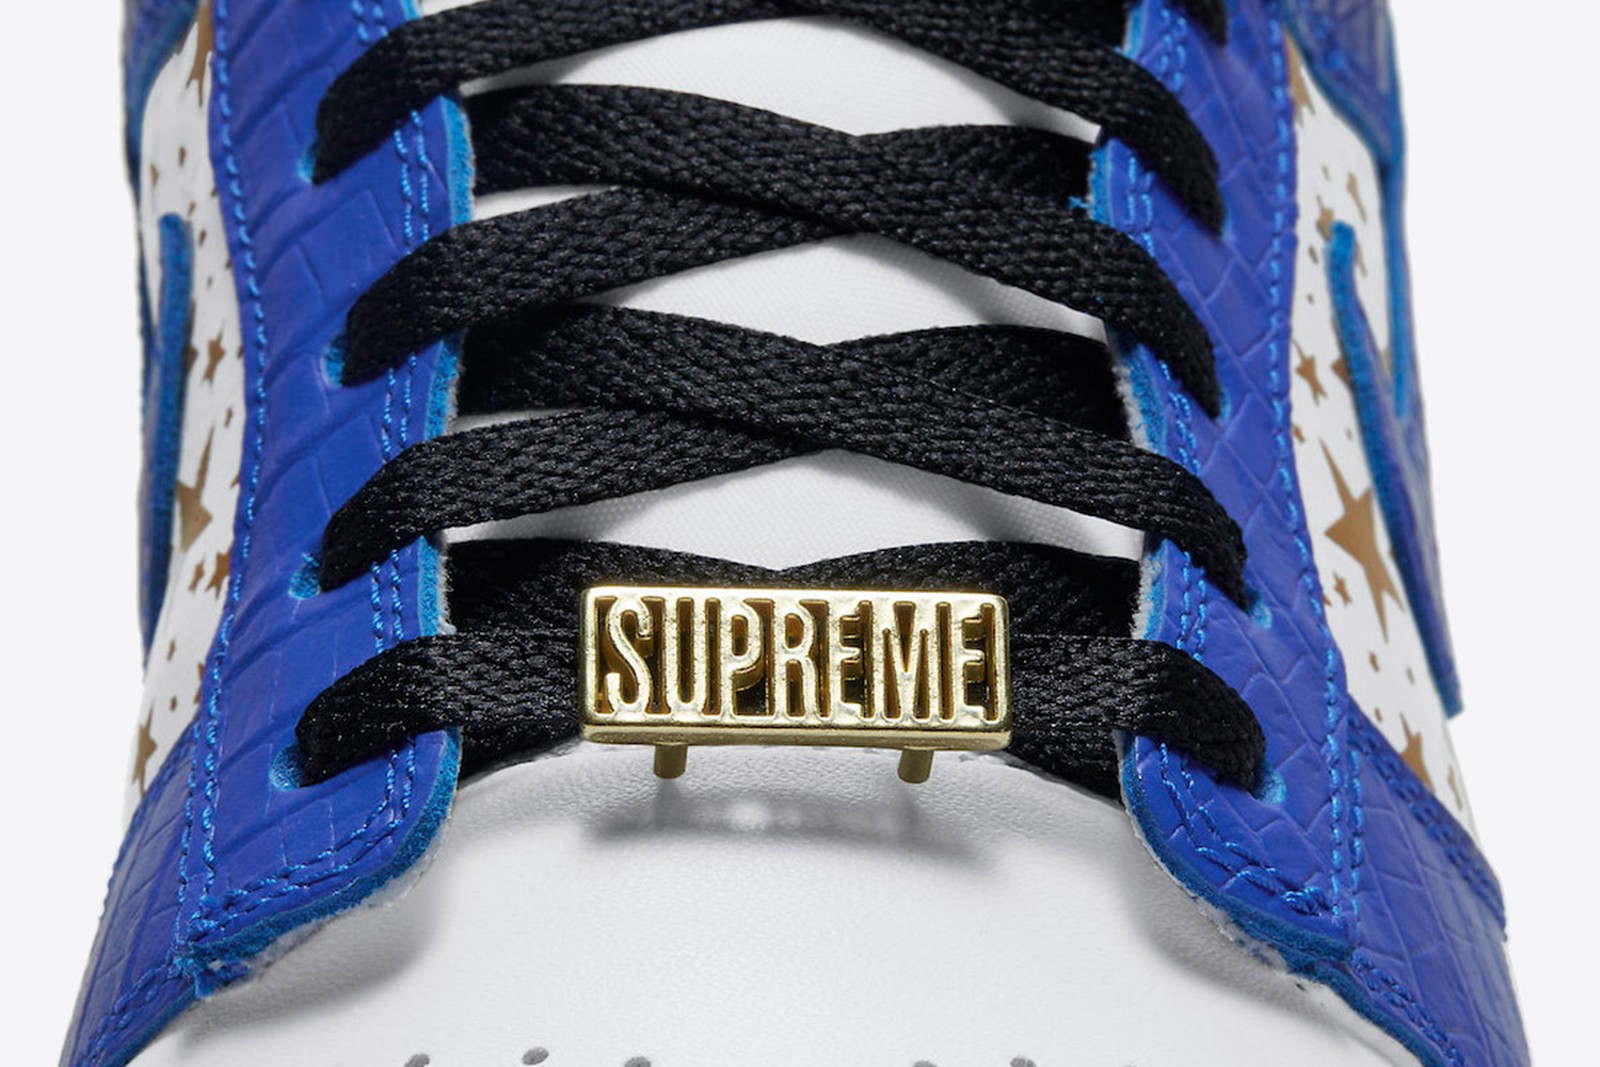 Official Images of Supreme x Nike Dunk Low Hyper Blue Arrive